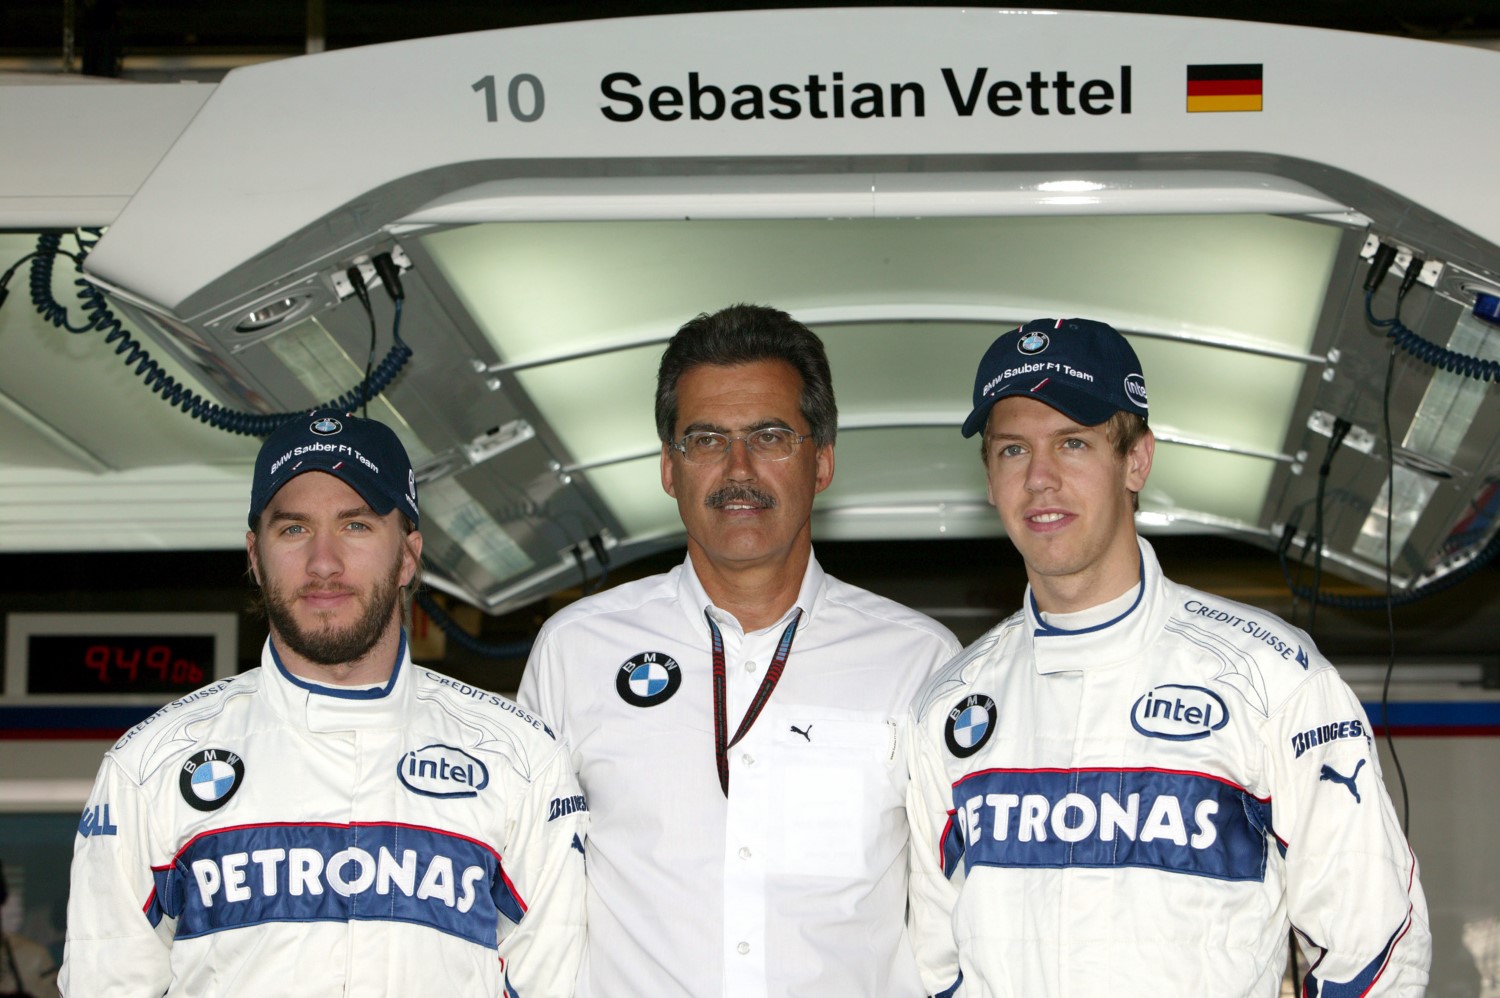 Heidfeld and Vettel